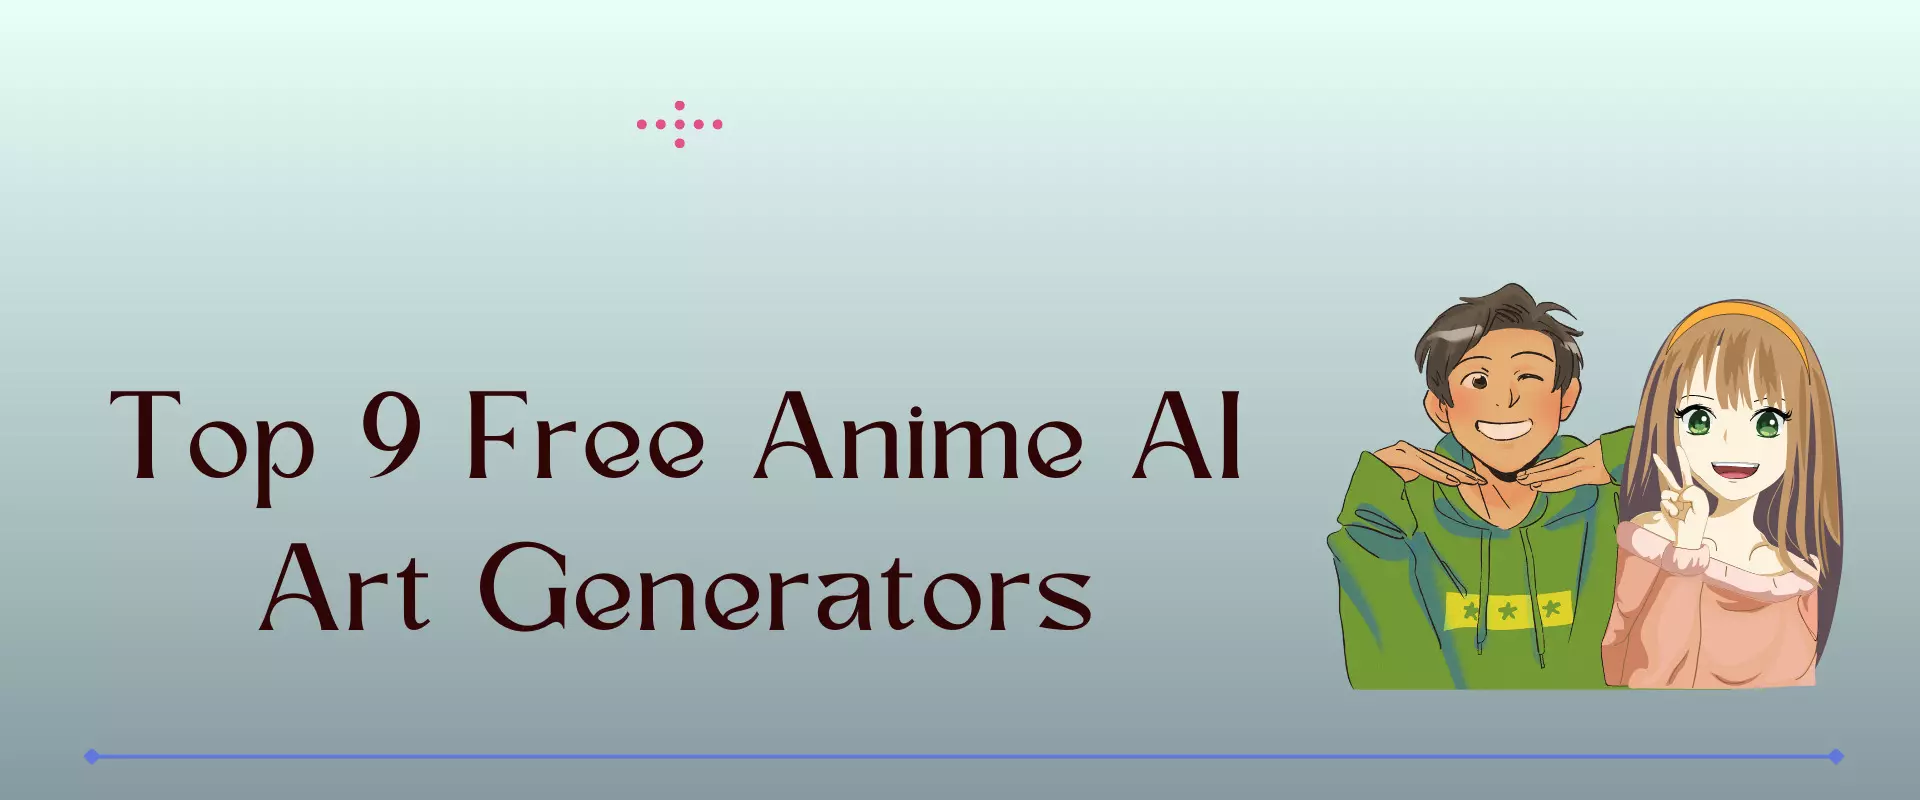 Anime for everyone A Beginners Guide to AI Anime Generators  by Eugenia  Anello  MLearningai  Medium